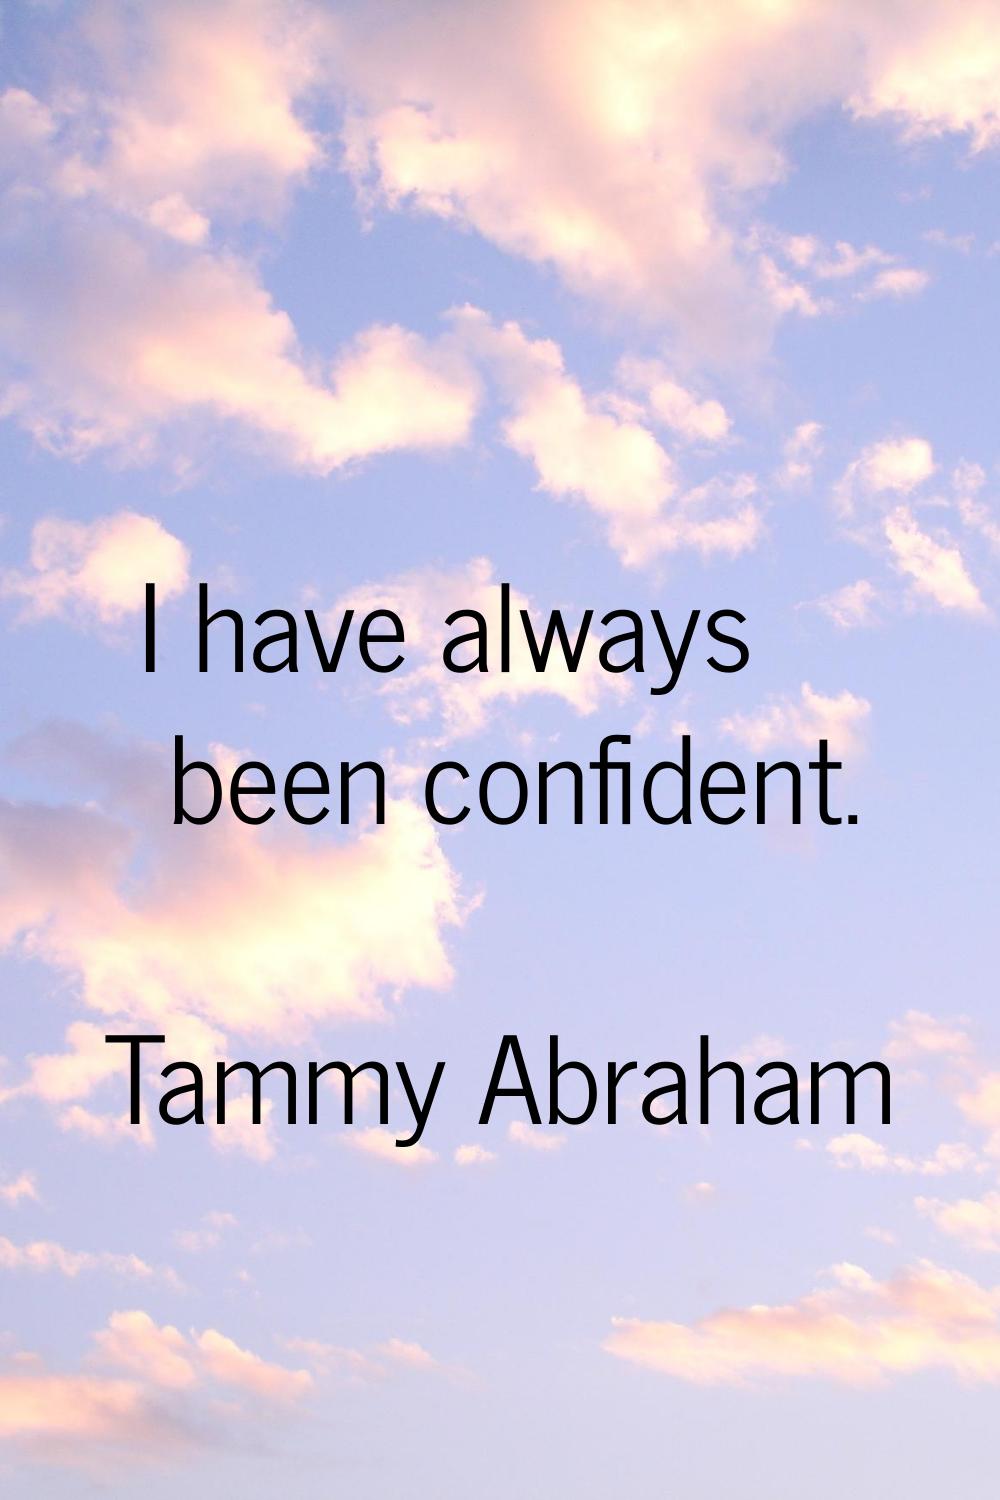 I have always been confident.